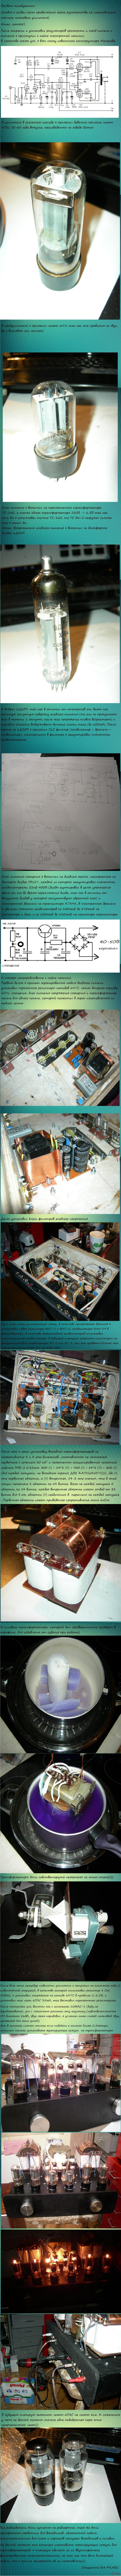 Ҹ    2       <a href="http://pikabu.ru/story/tyoplyiy_lampovyiy_usilitel_chast_1_2989409#comments">http://pikabu.ru/story/_2989409</a>